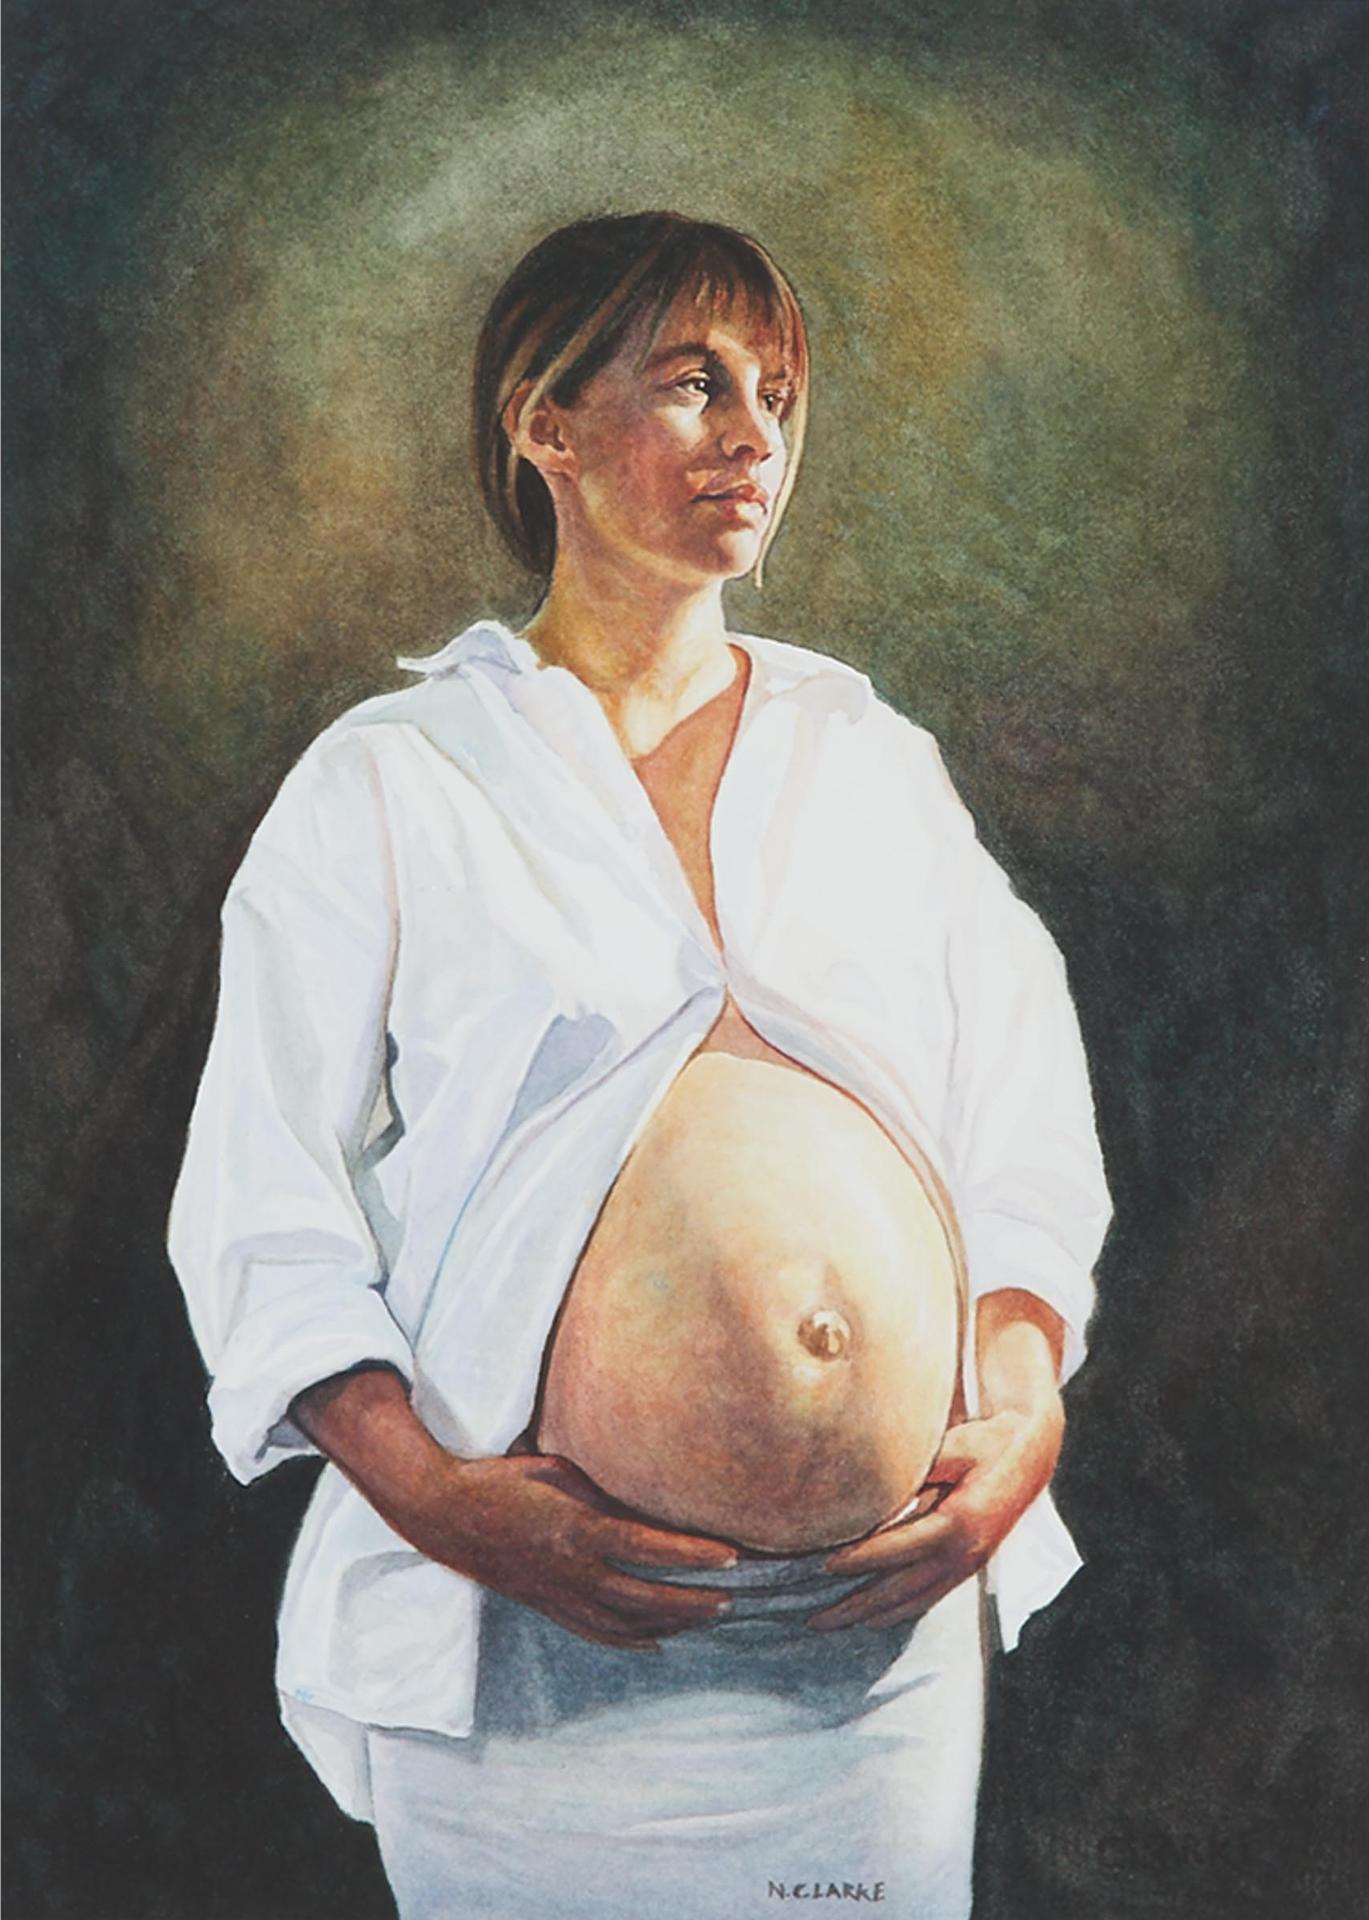 Neville Clarke (1959) - Pregnant Glow, 2003